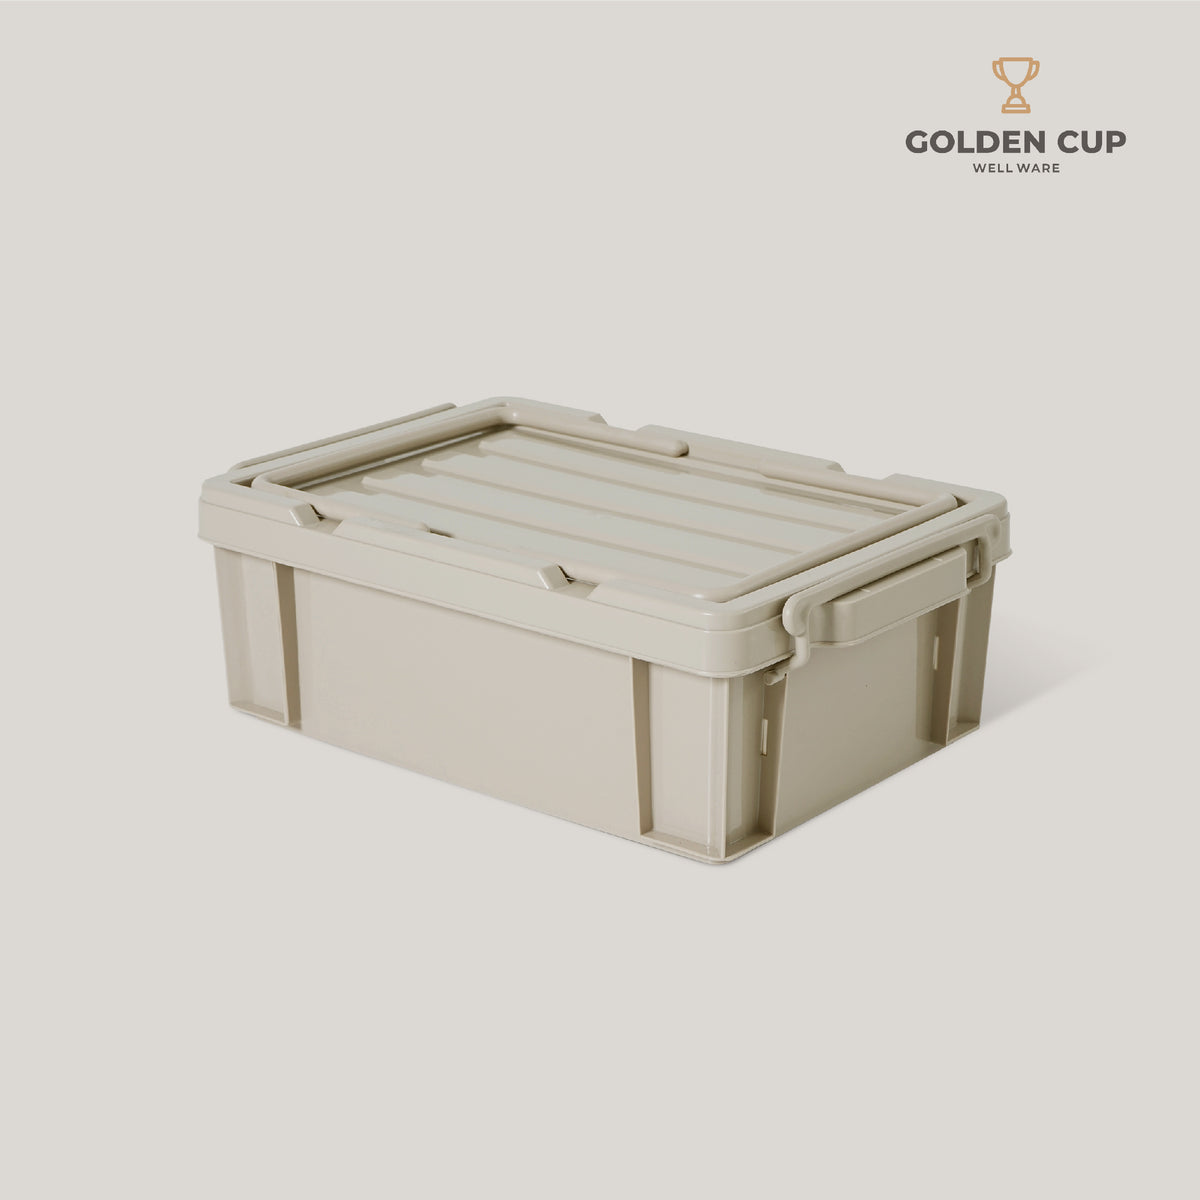 Golden Cup กล่องเก็บของอเนกประสงค์AG1012 ขนาด 12 ลิตร